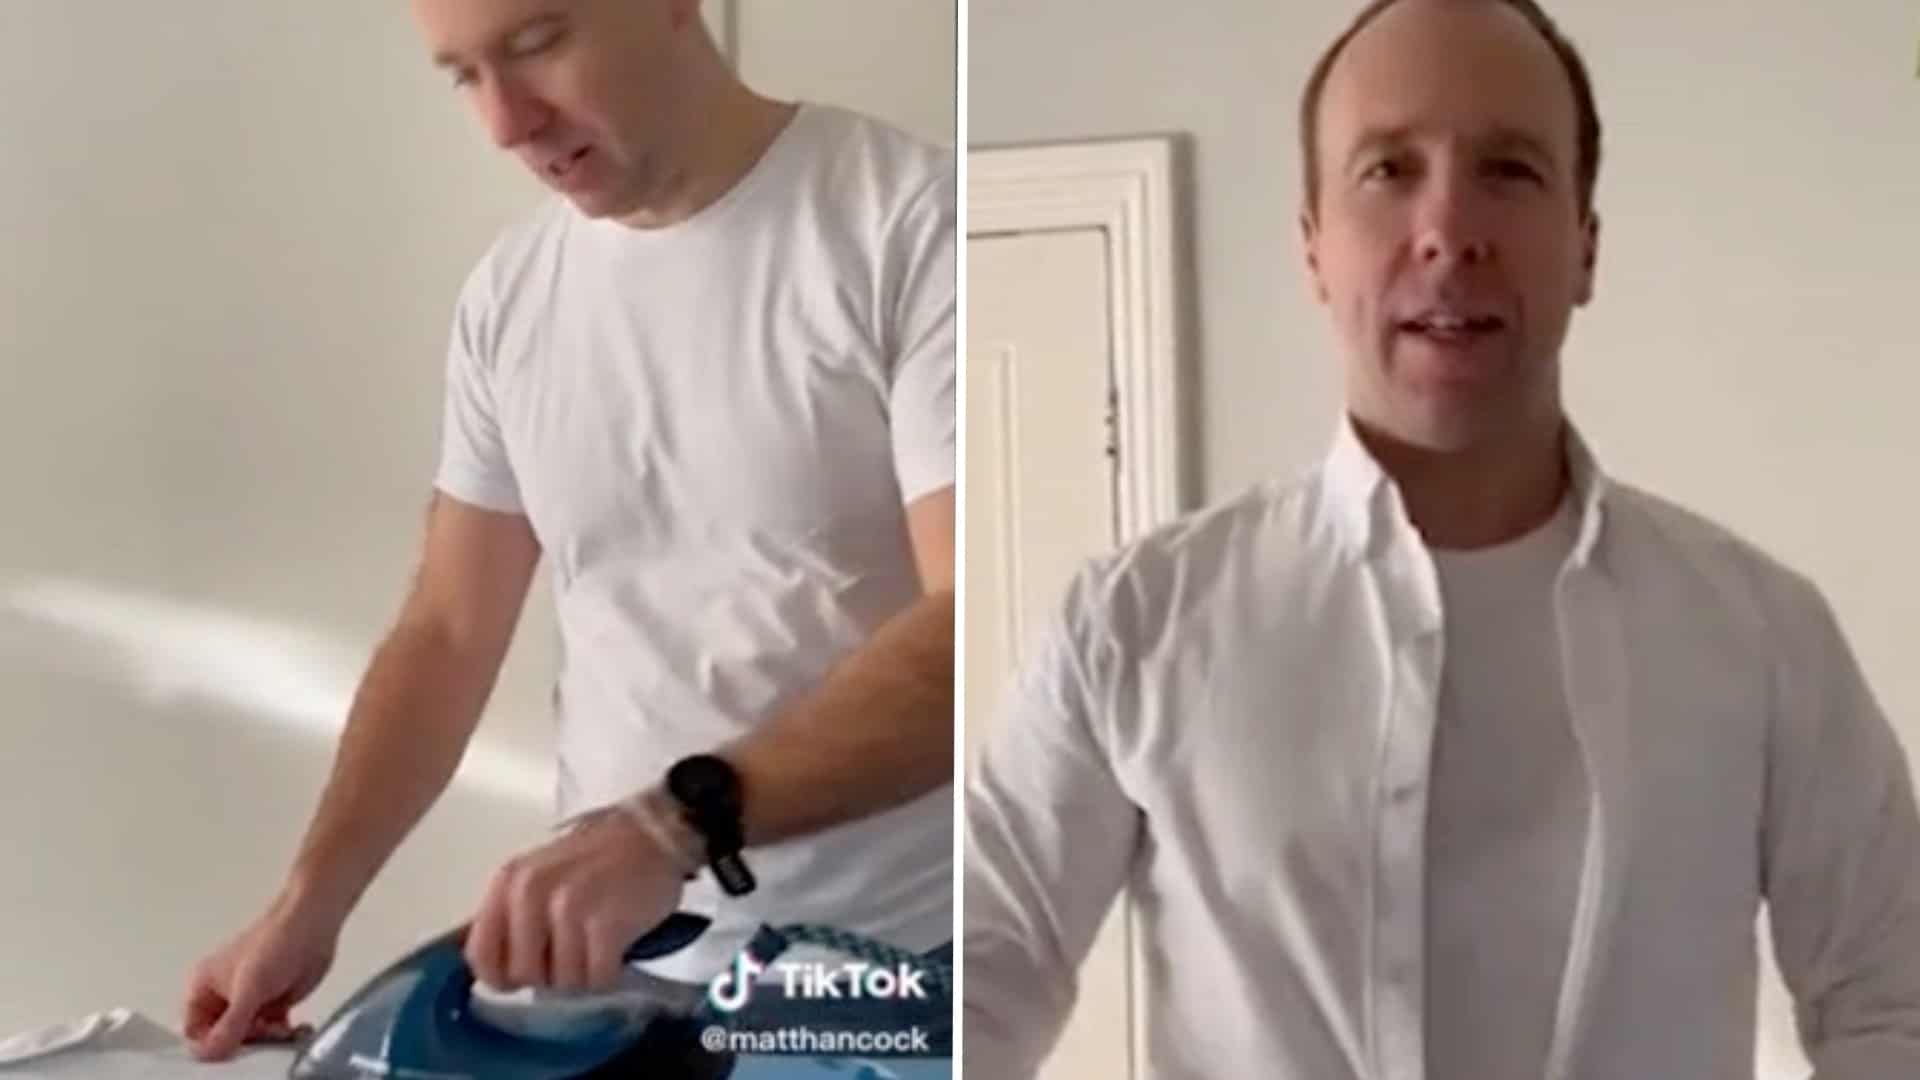 Matt Hancock’s latest TikTok video makes social media users crease up